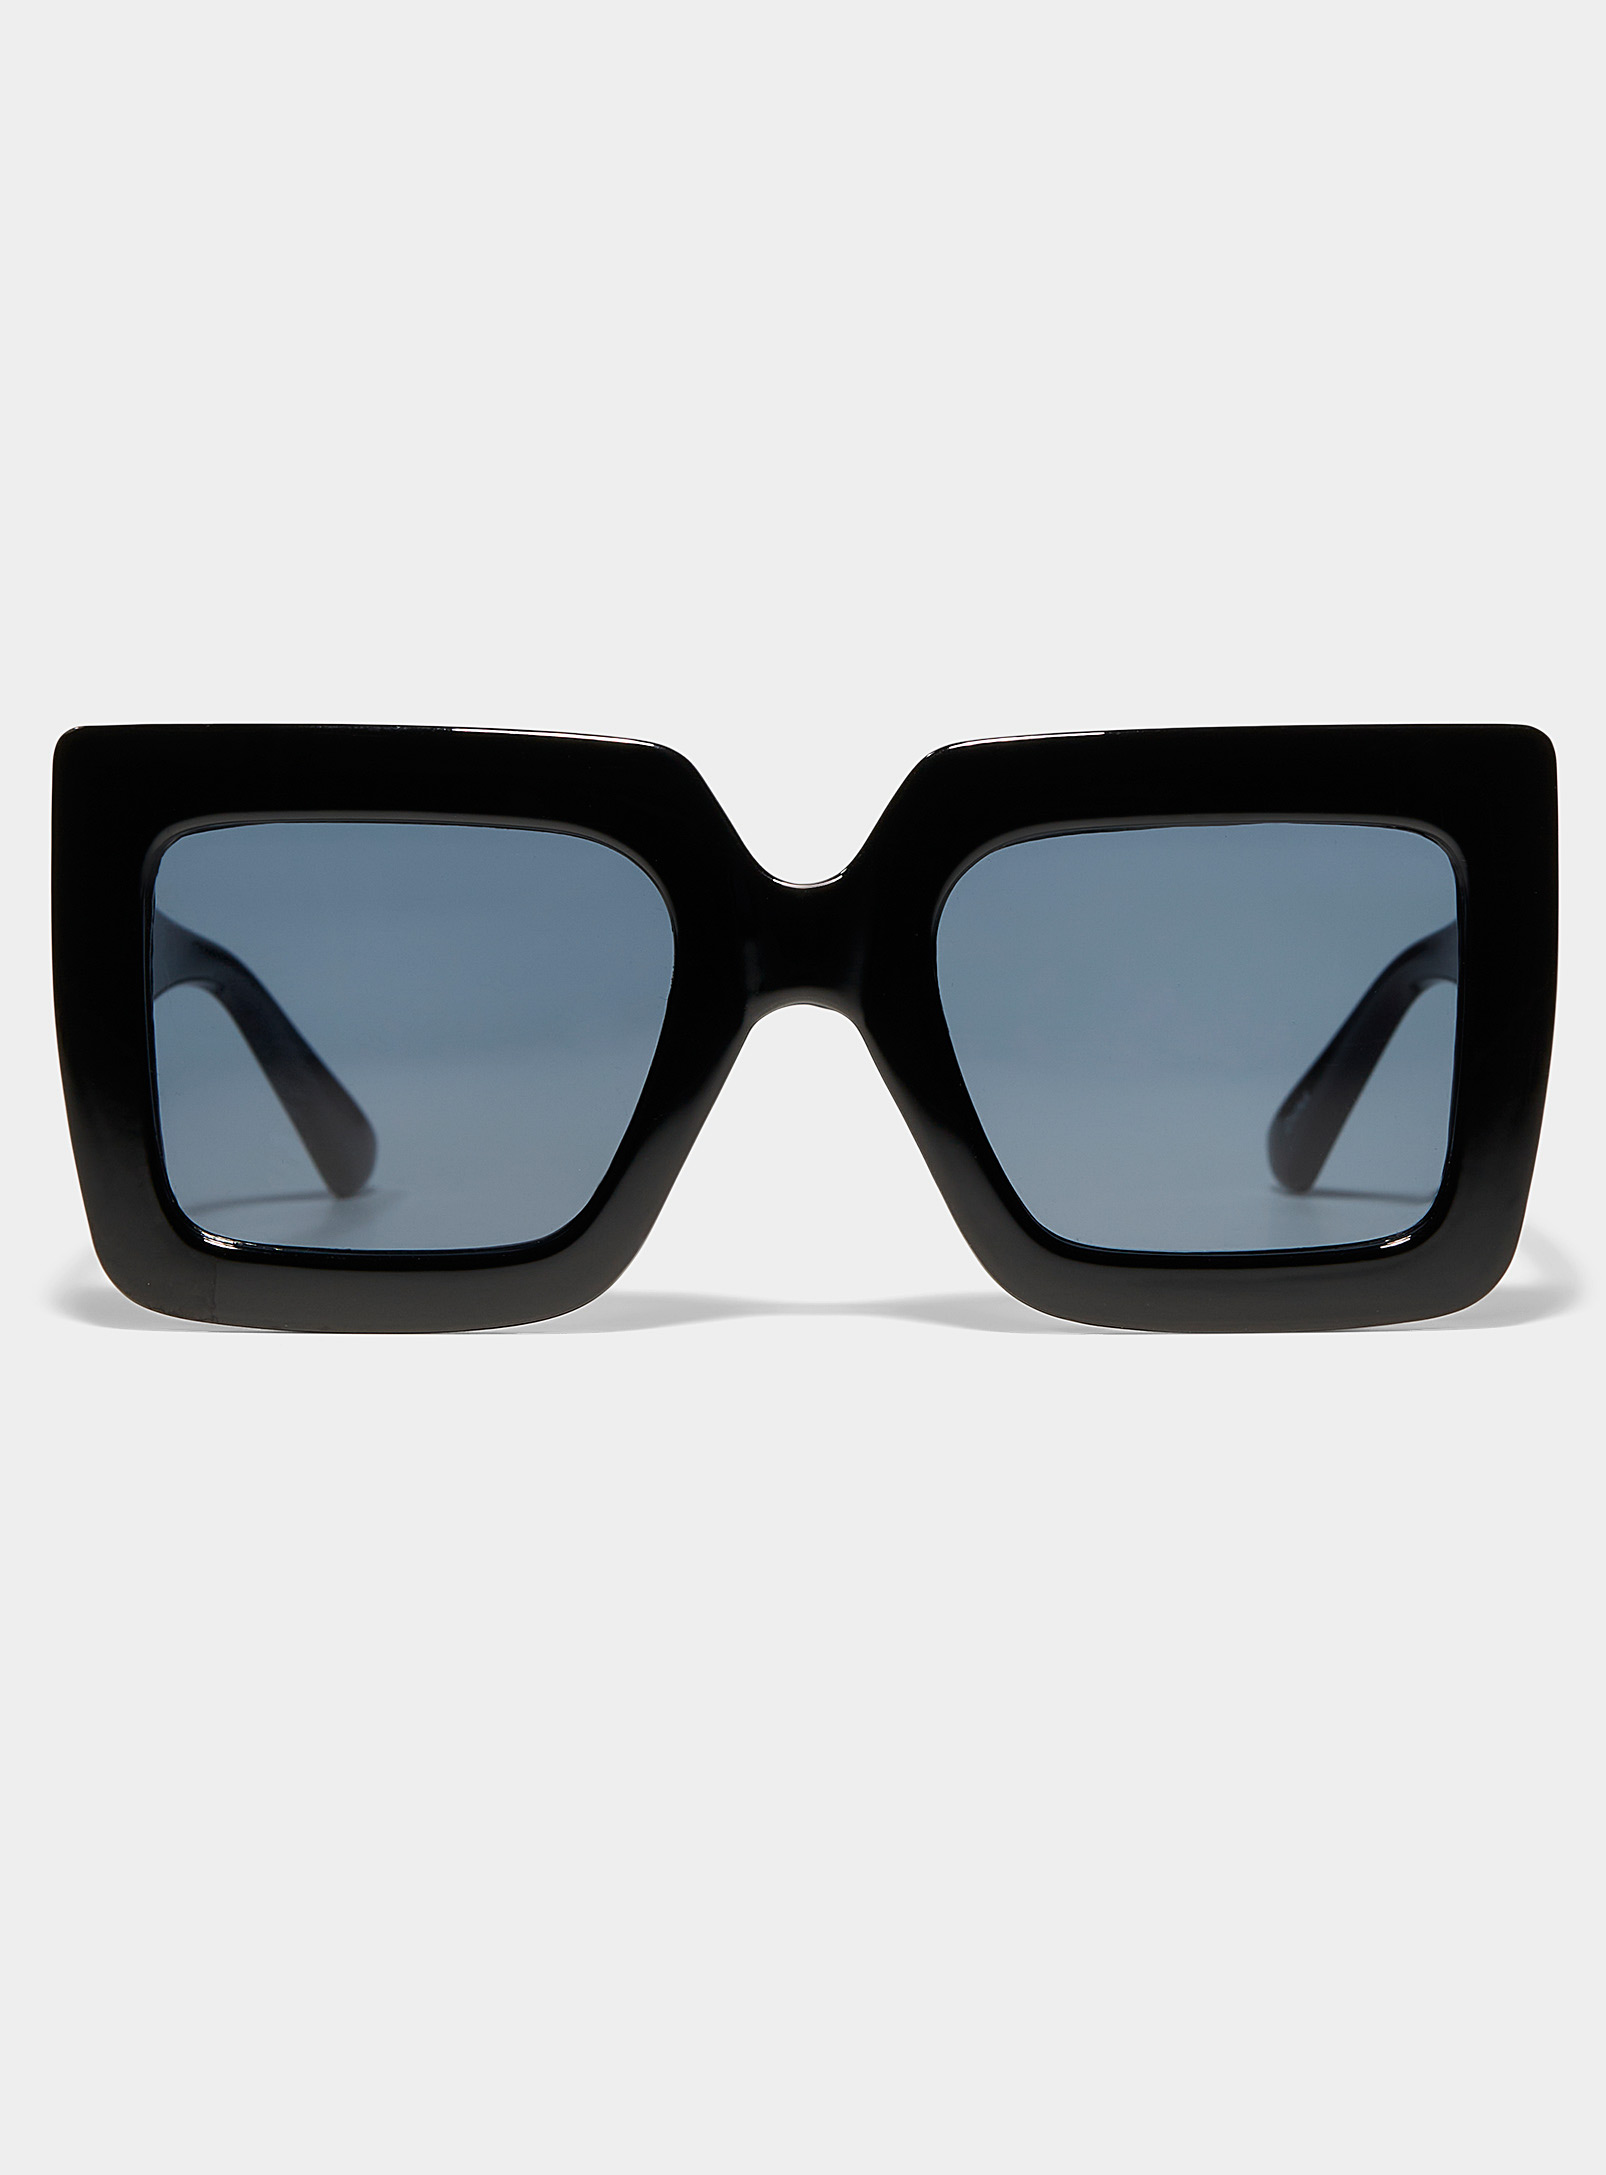 Simons - Women's Oversized Lexicon square sunglasses